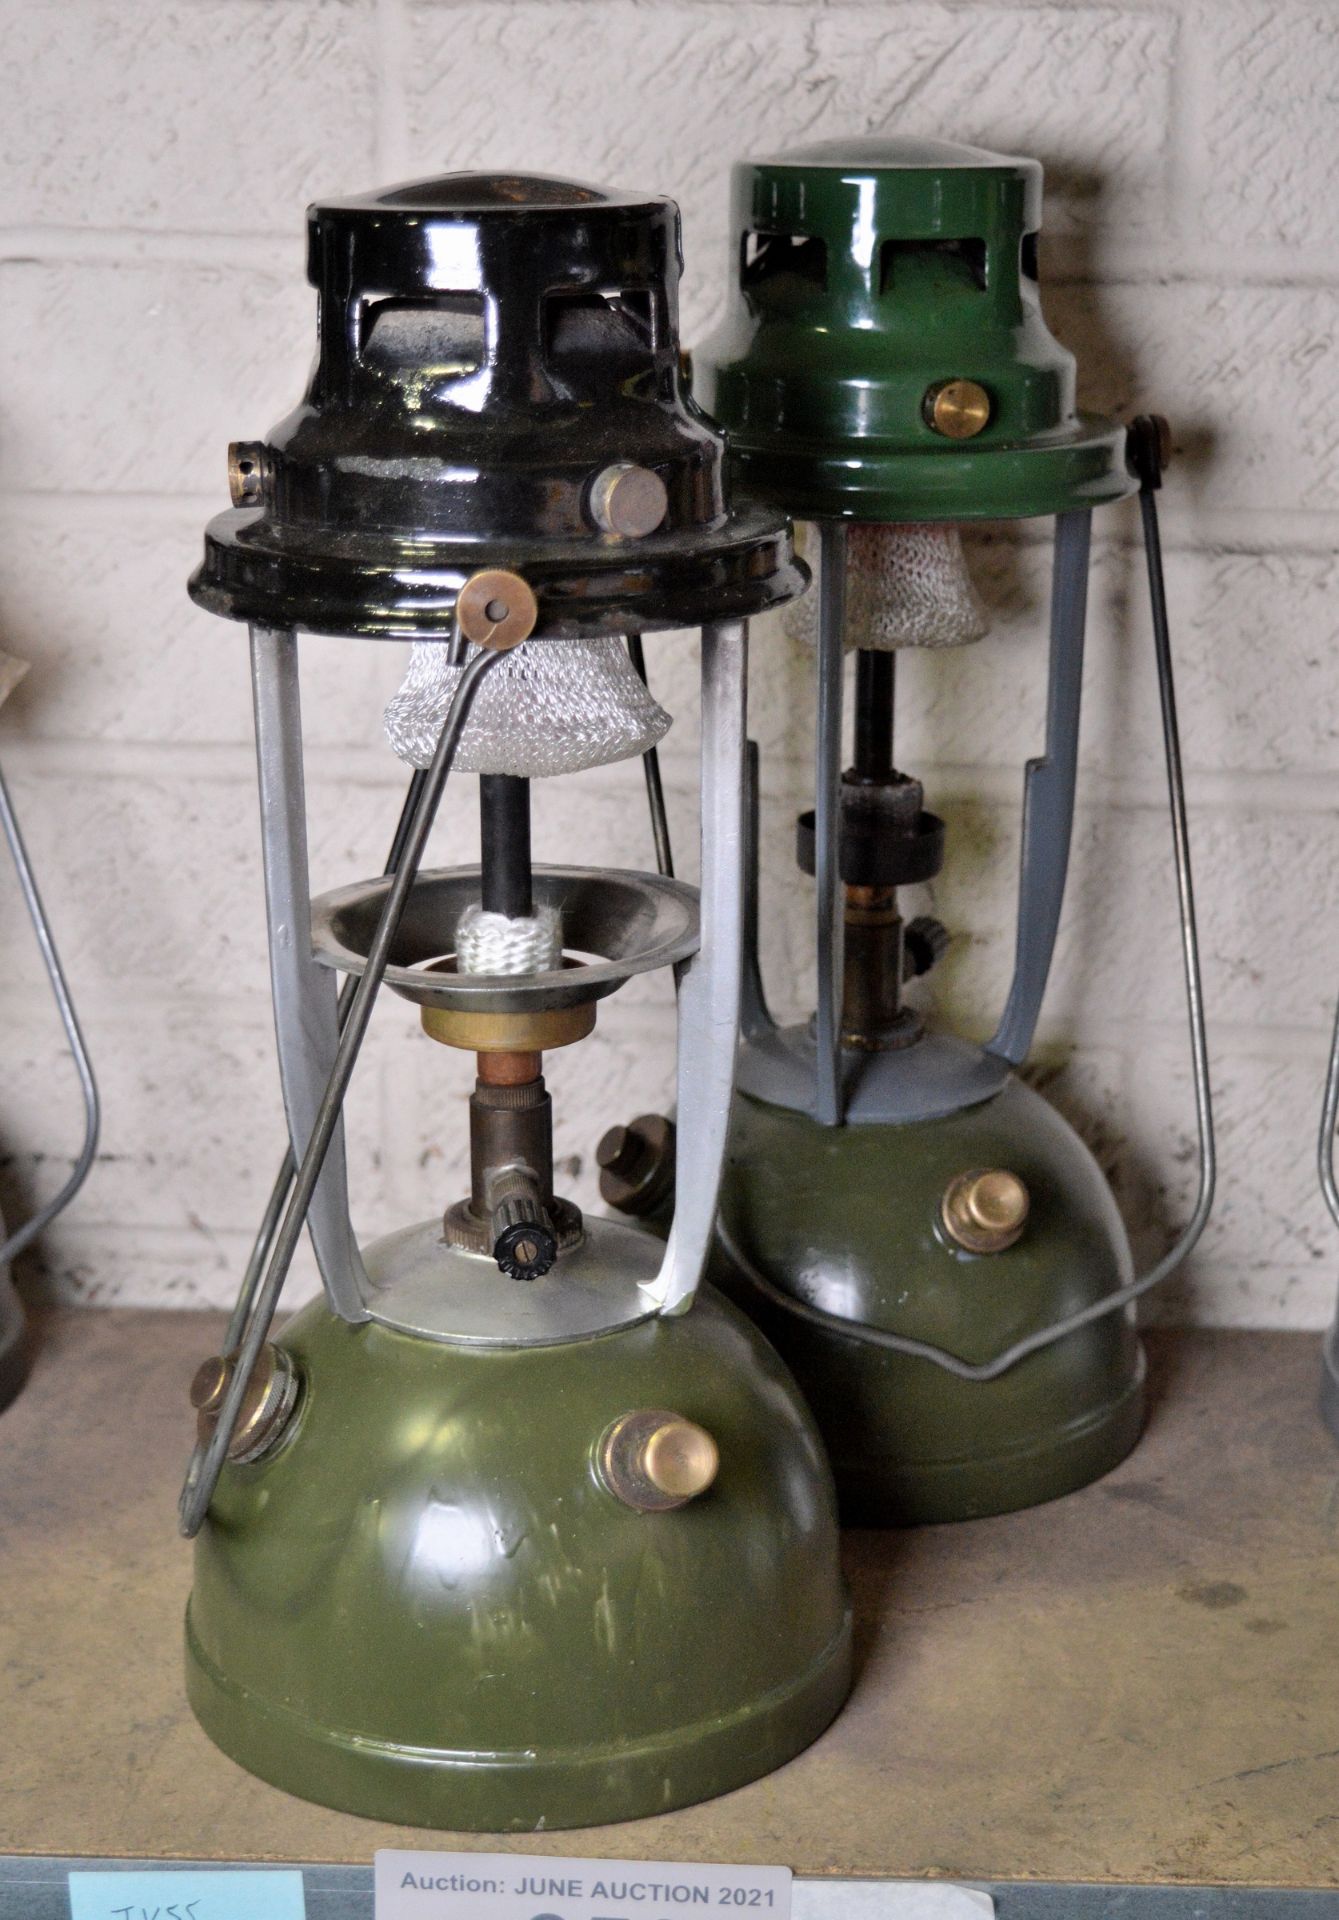 2x Kerosine tilley lamps - 1x green base, black top - 1x green base, green top